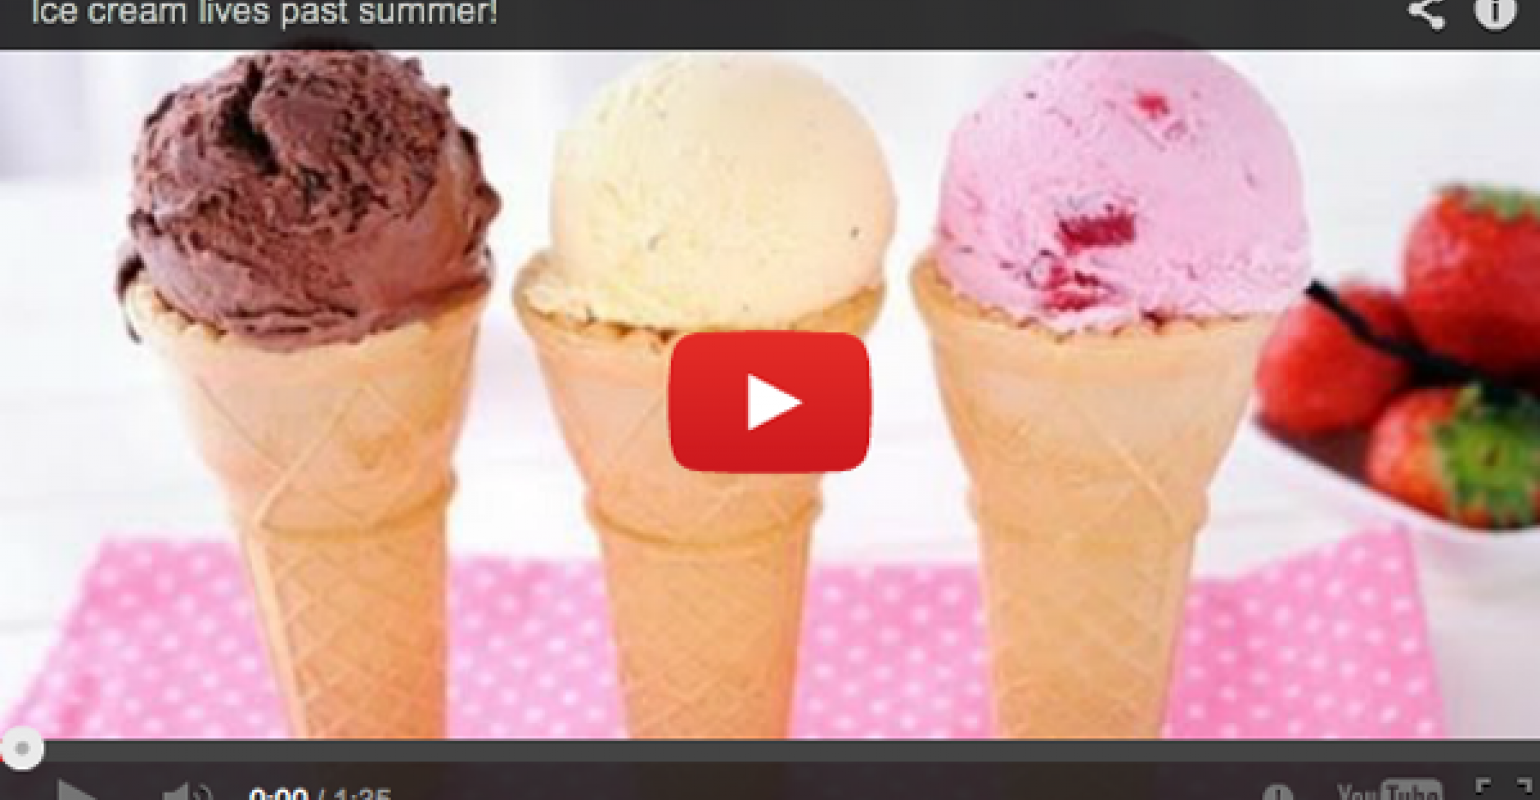 The Lempert Report: Ice Cream Lives Past Summer! (Video)